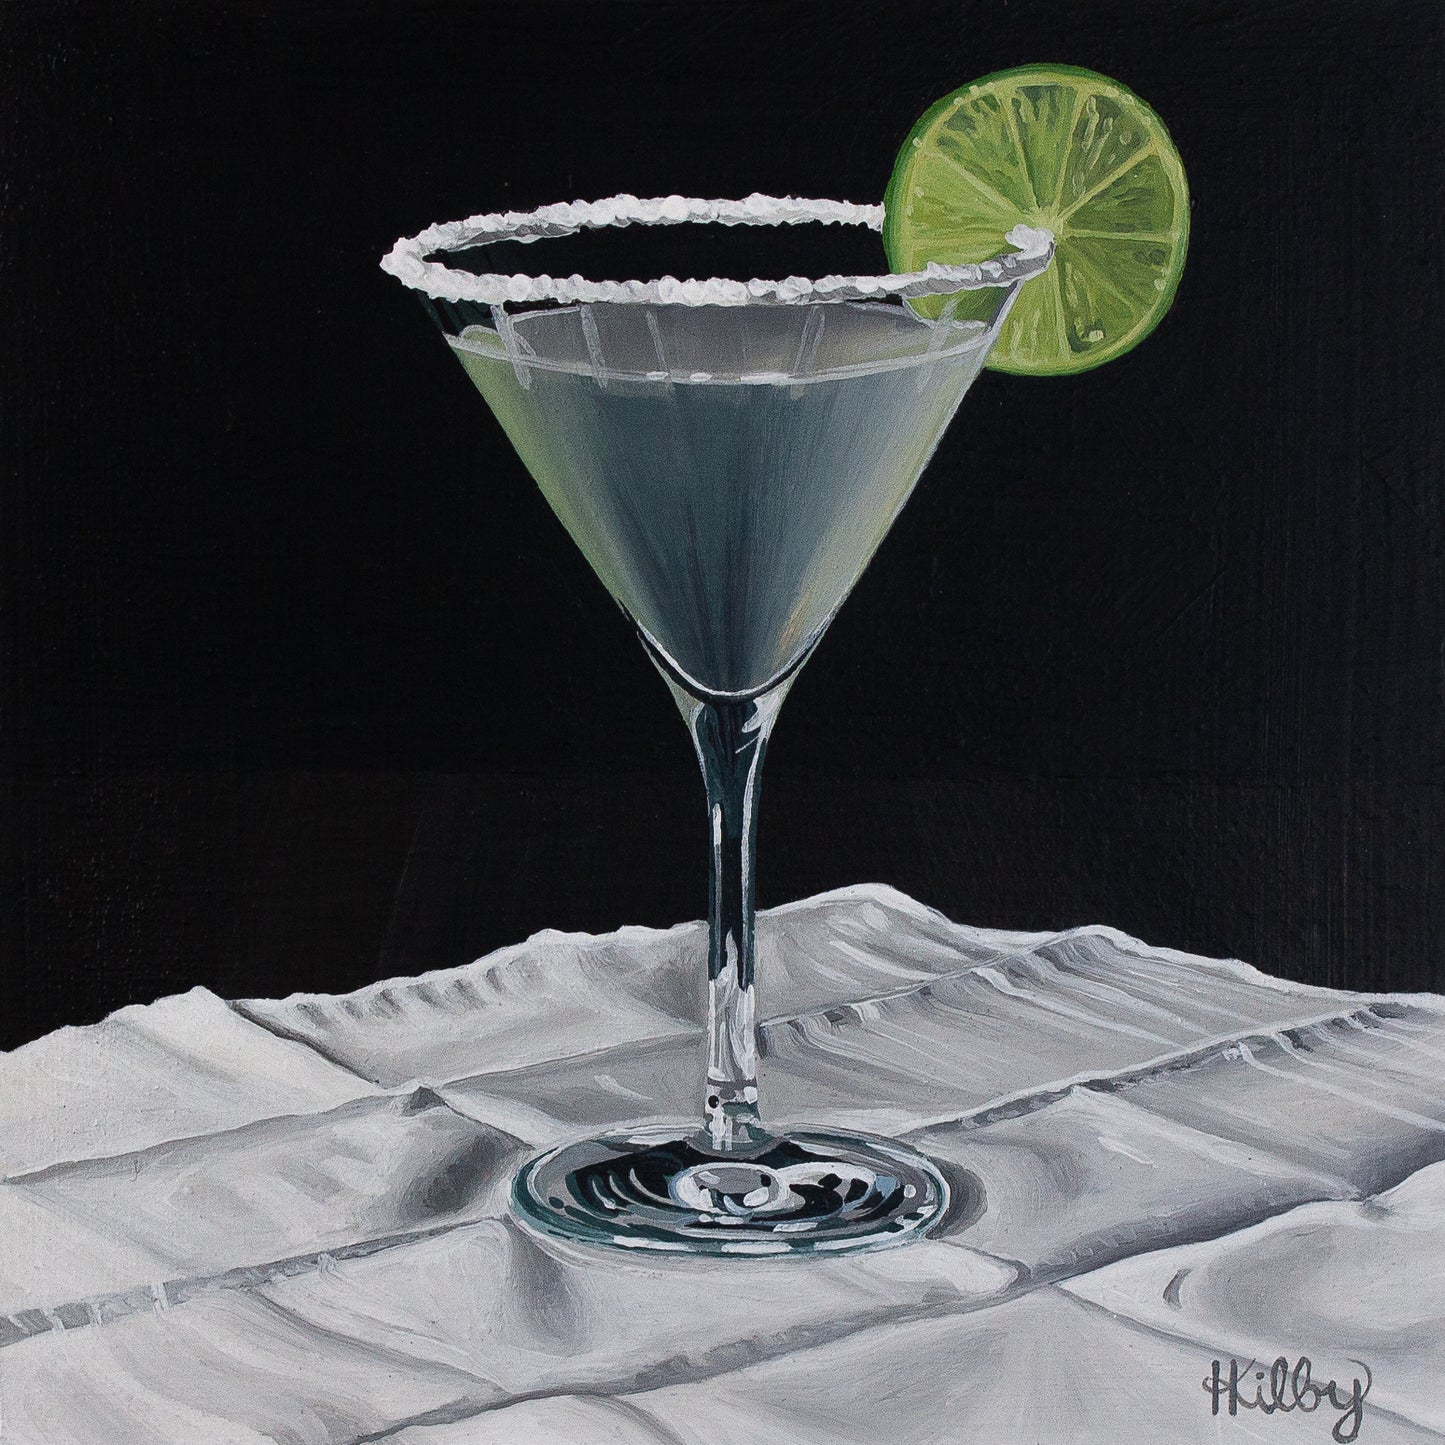 The original acrylic painting "Margarita" by Hannah Kilby from Hannah Michelle Studios.